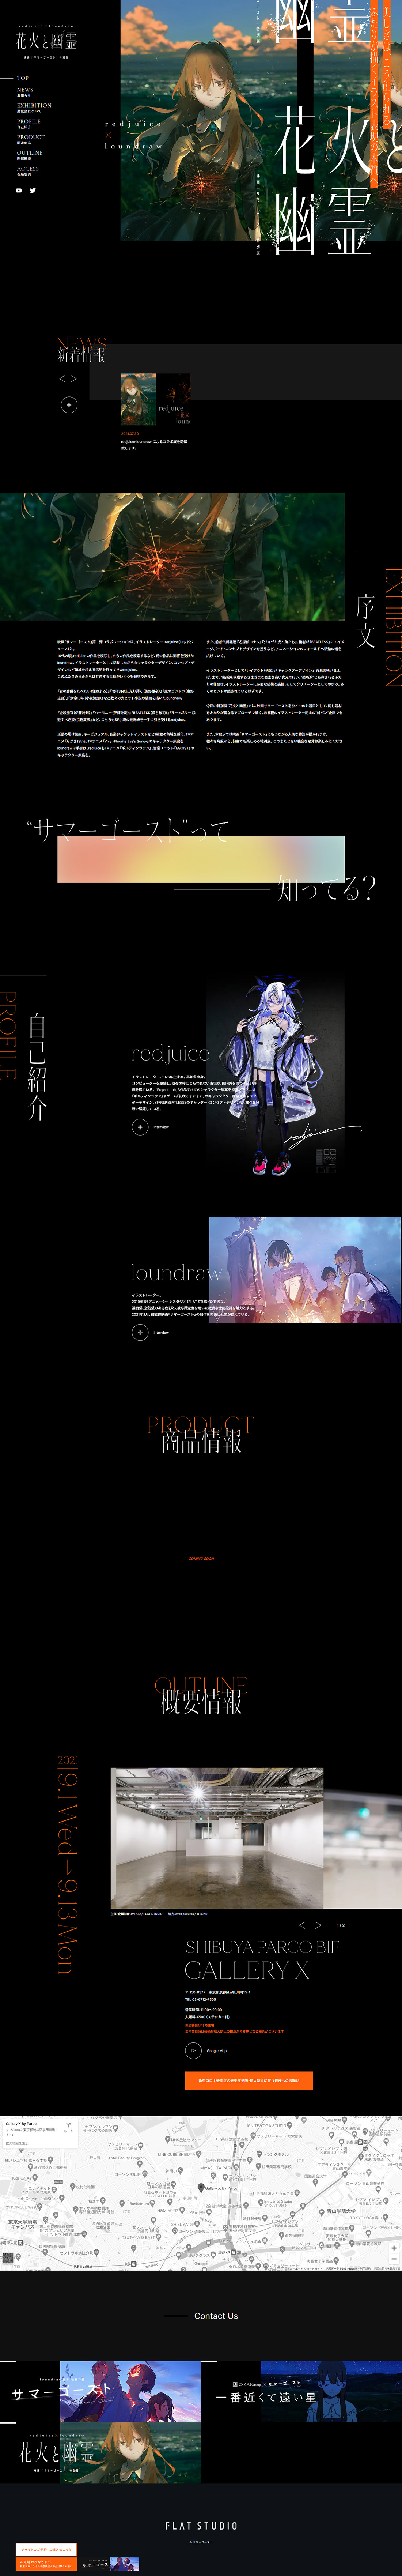 redjuice×loundraw 特別展｢花火と幽霊｣特設サイト